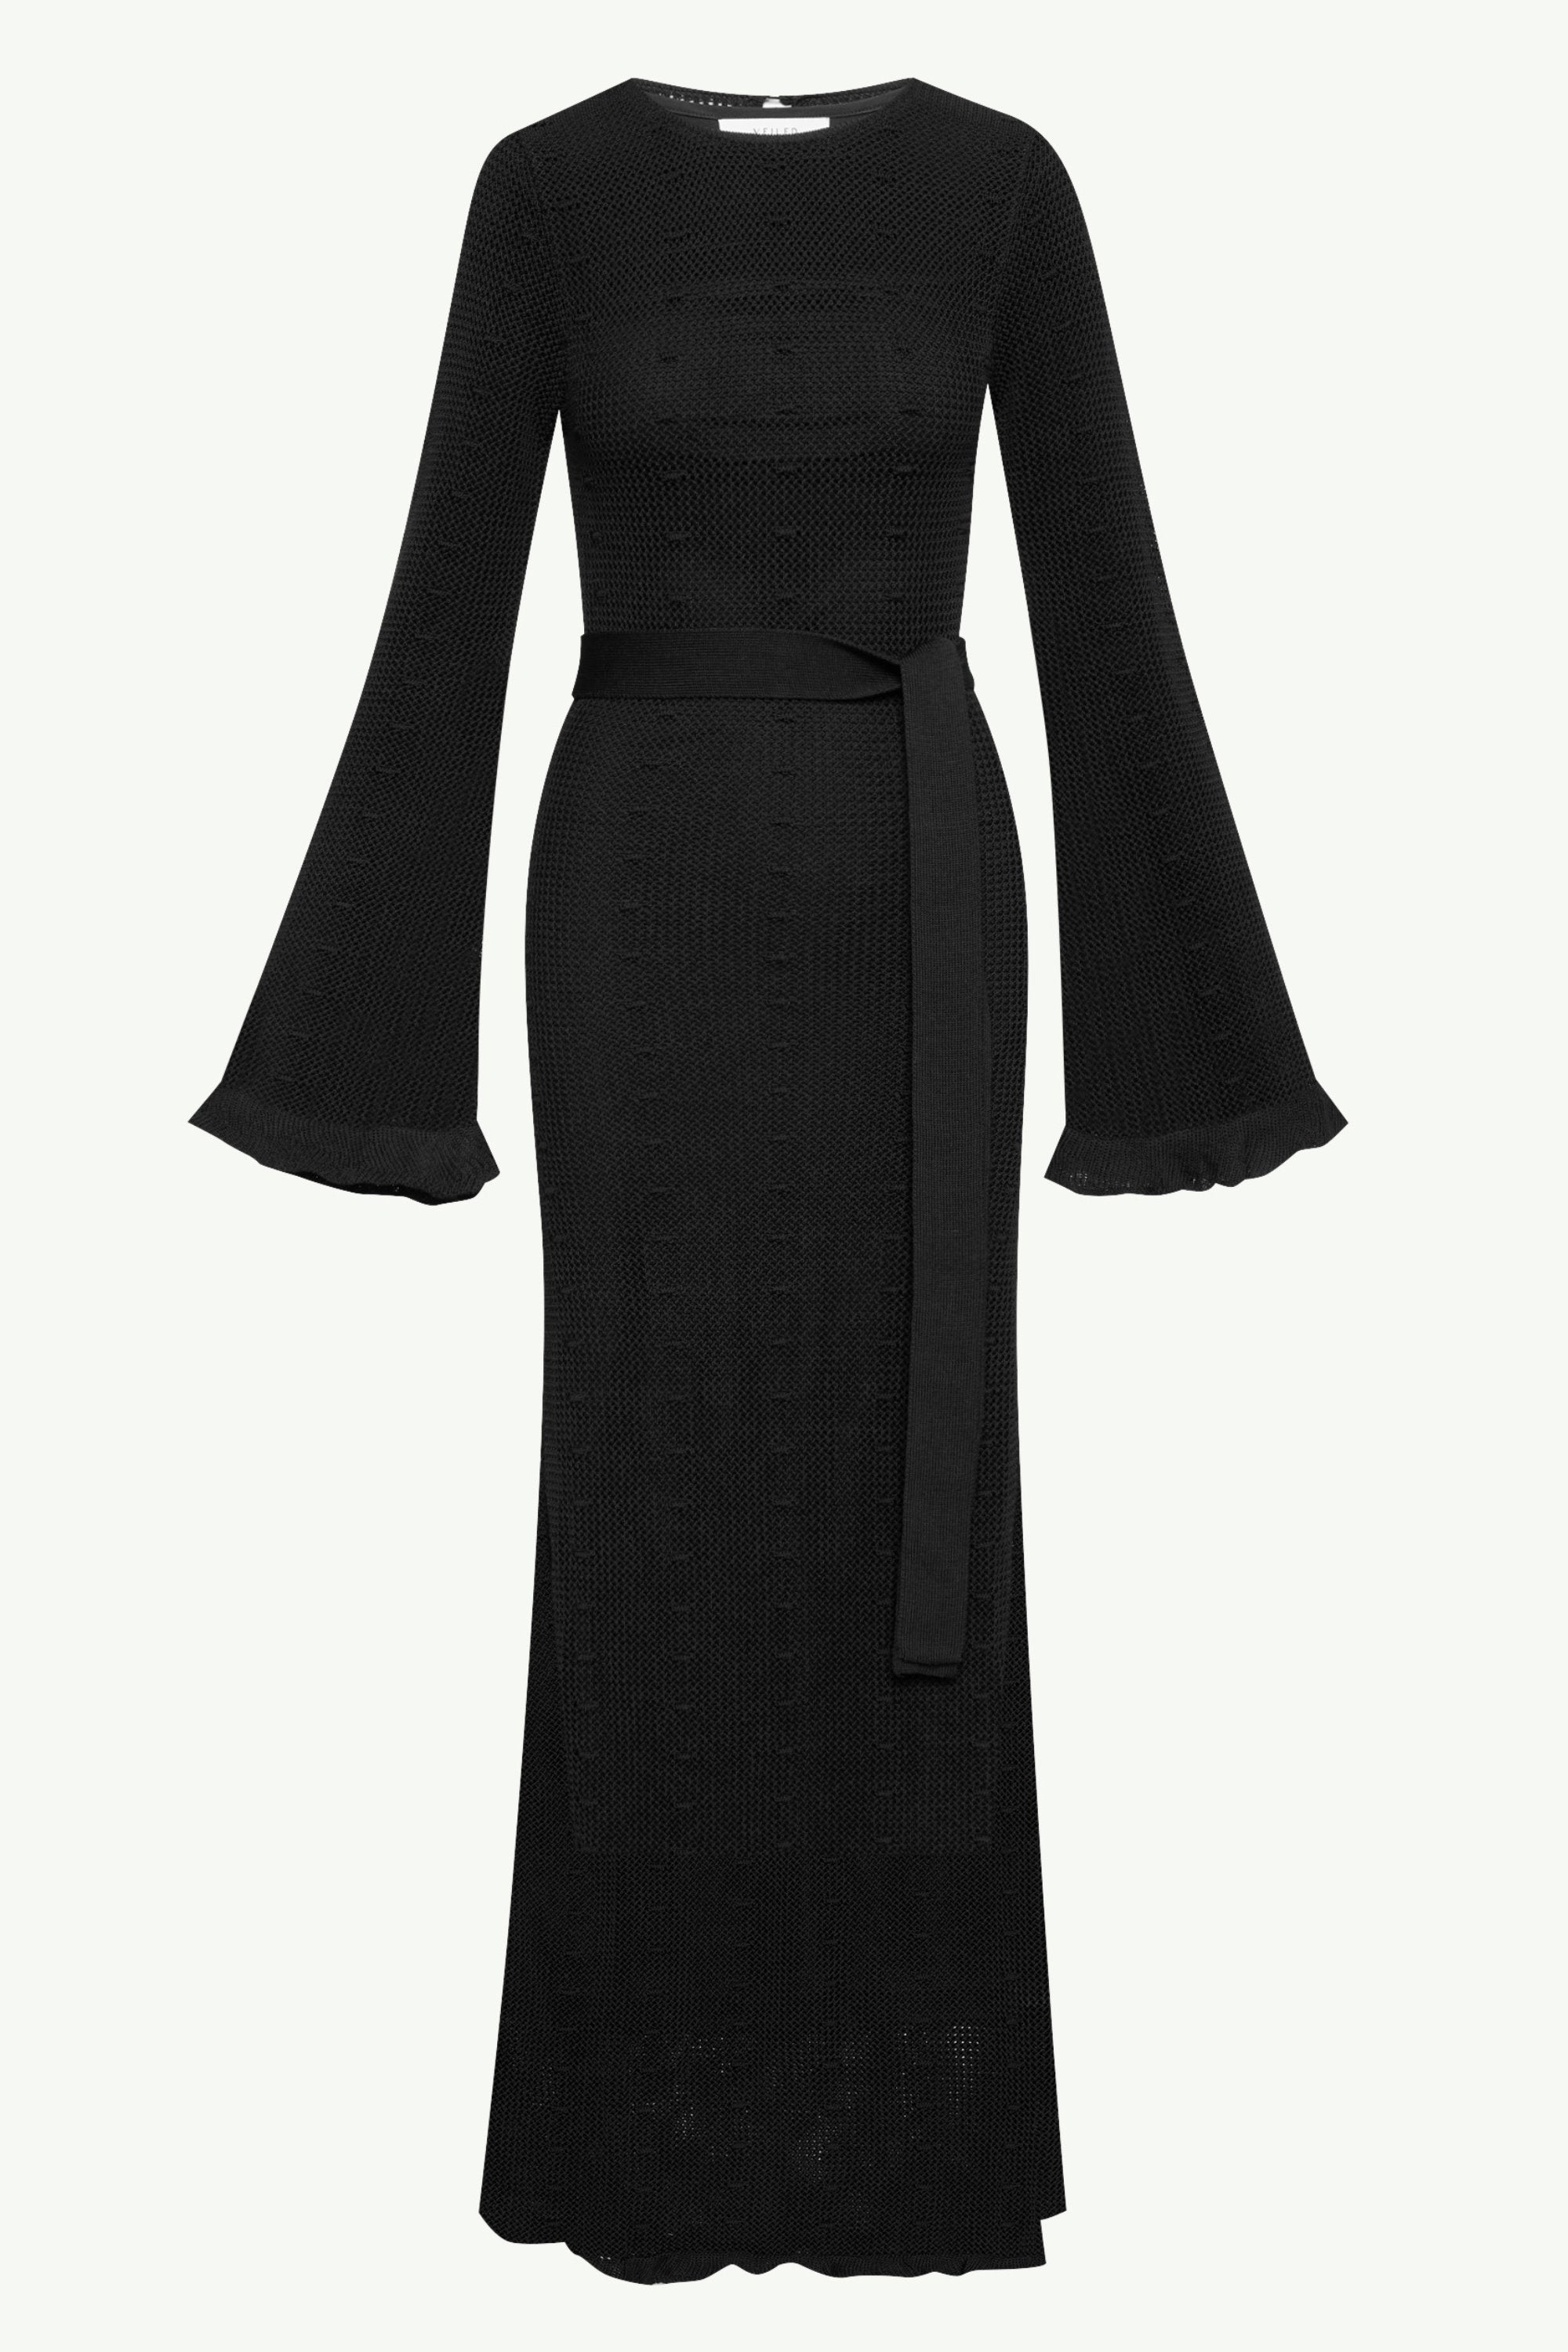 Leilani Crochet Maxi Dress - Black Clothing Veiled 